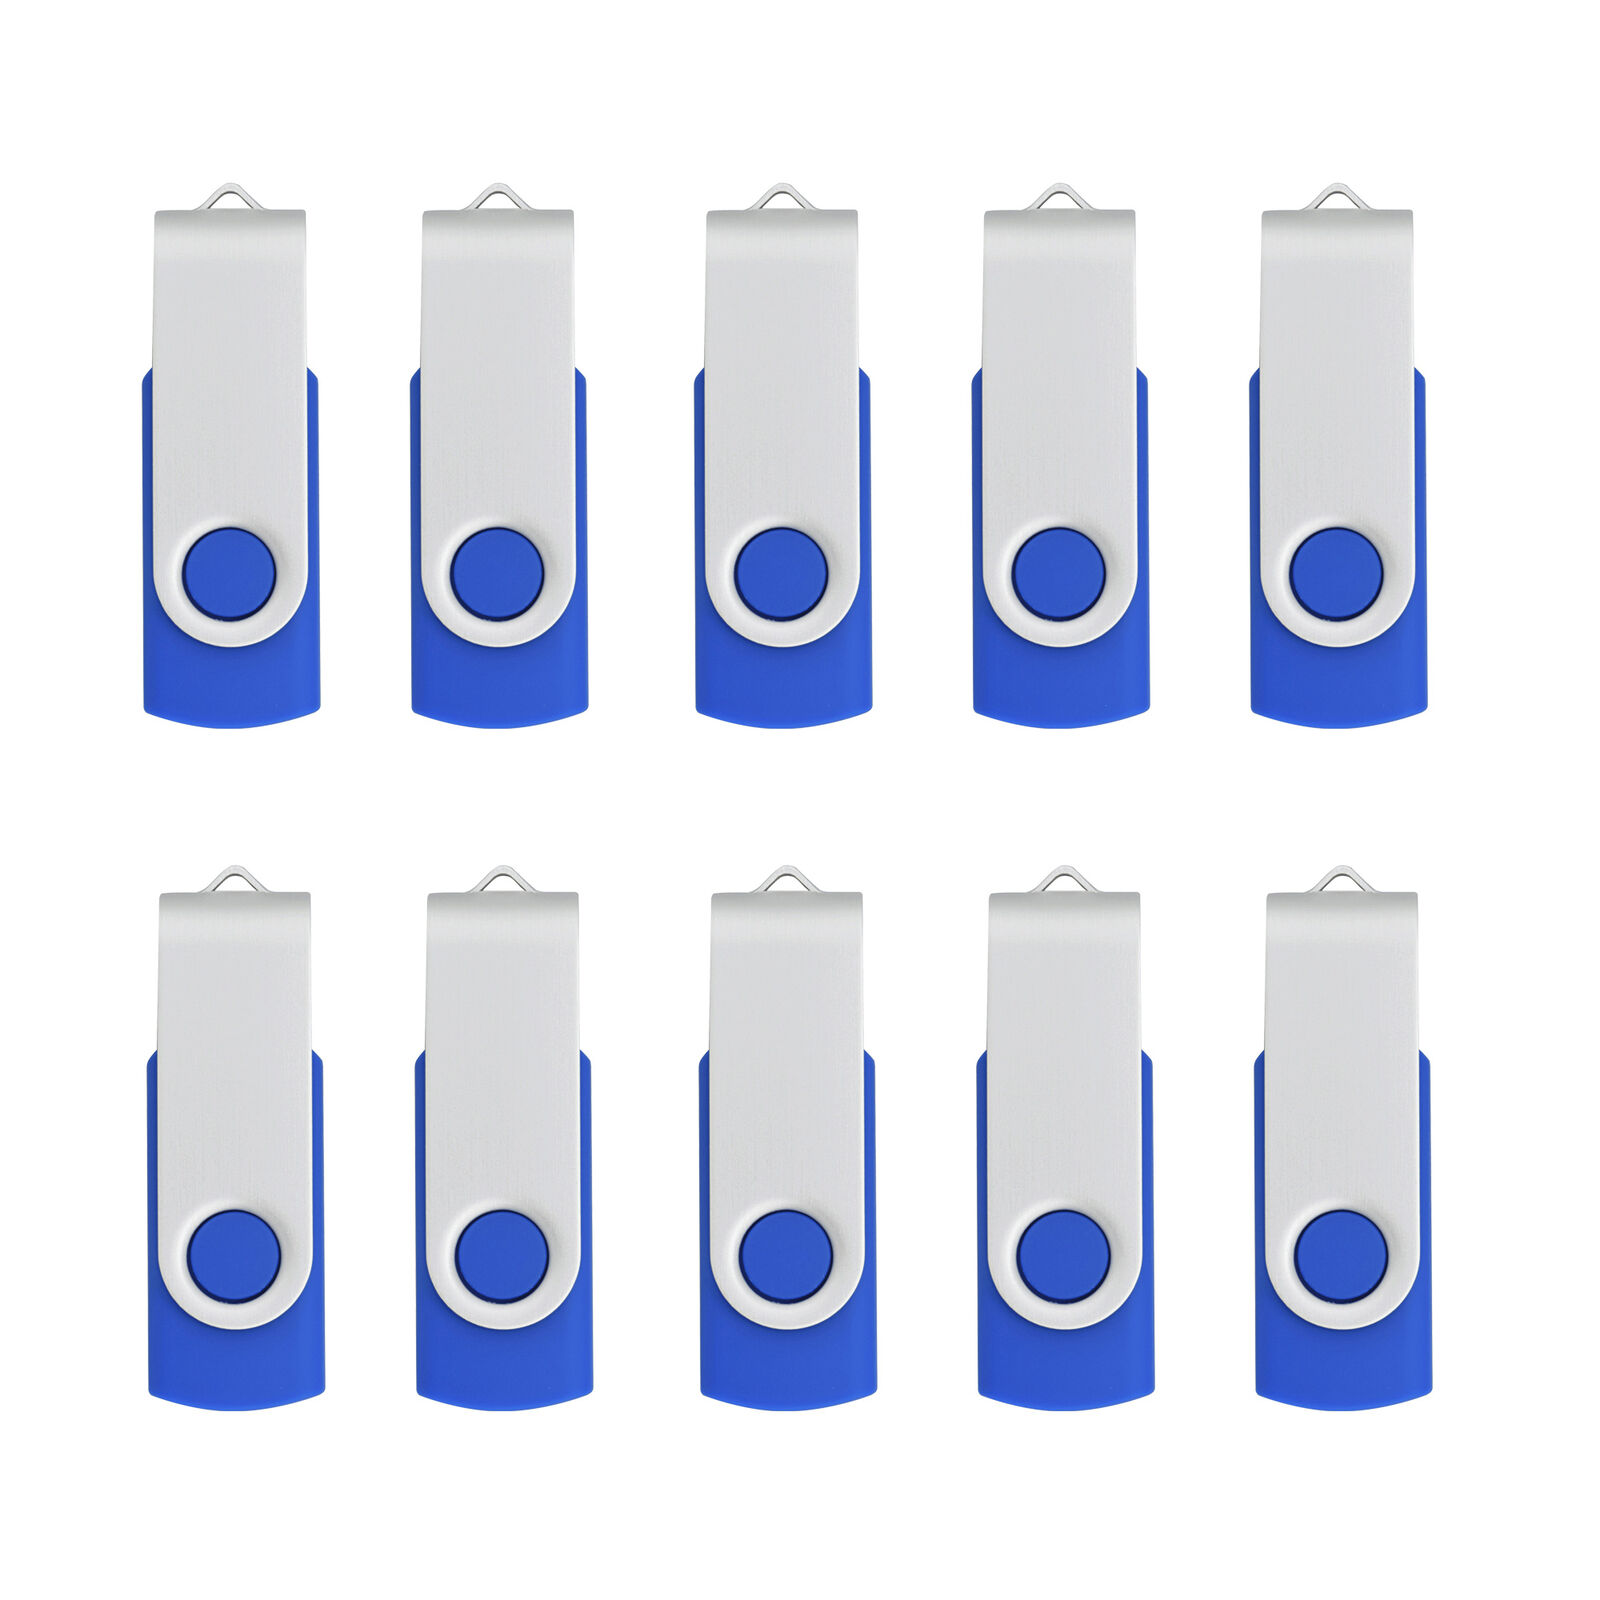 Wholesale 10-100pcs 8GB Metal Swivel Anti-skid USB 2.0 Flash Drives Memory Stick